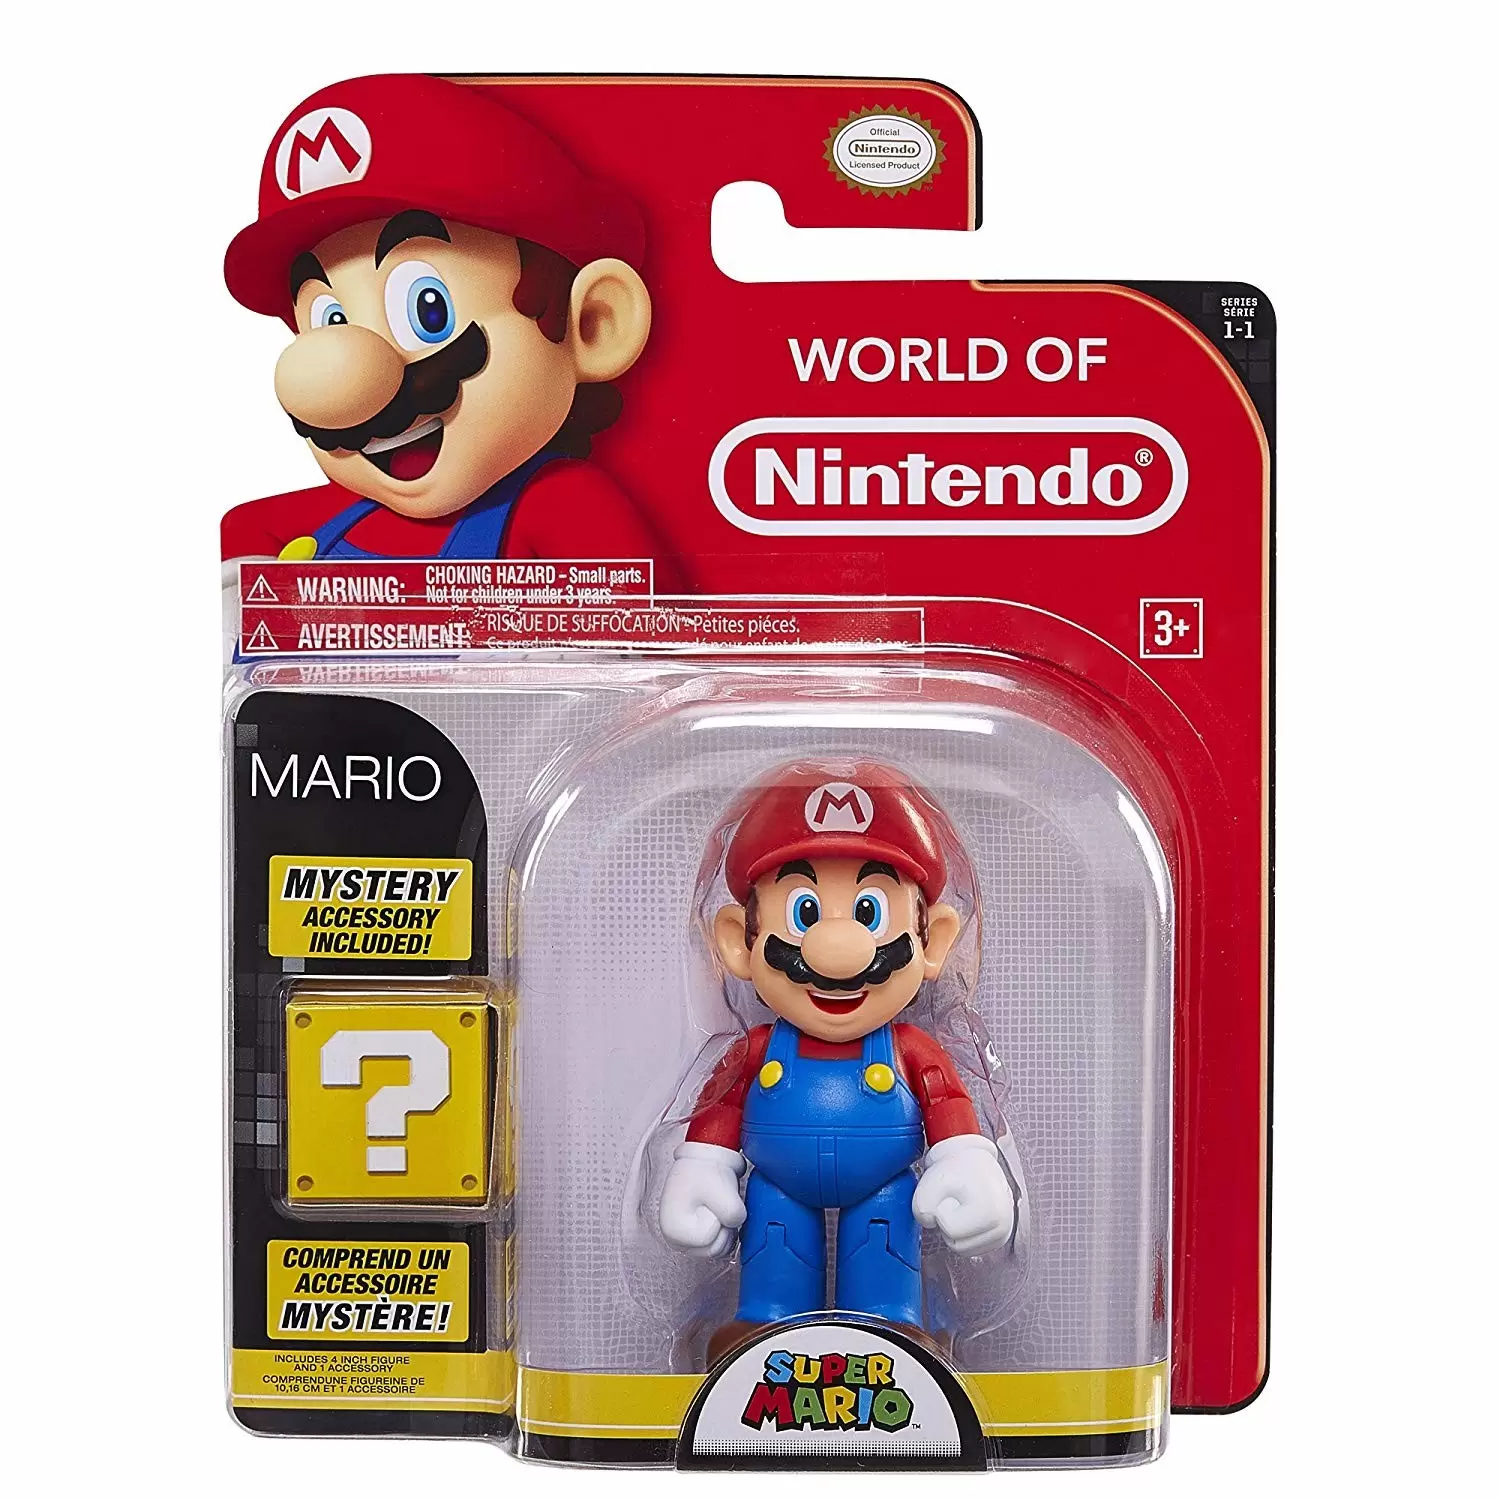 World of Nintendo - Mario (4-Inch)